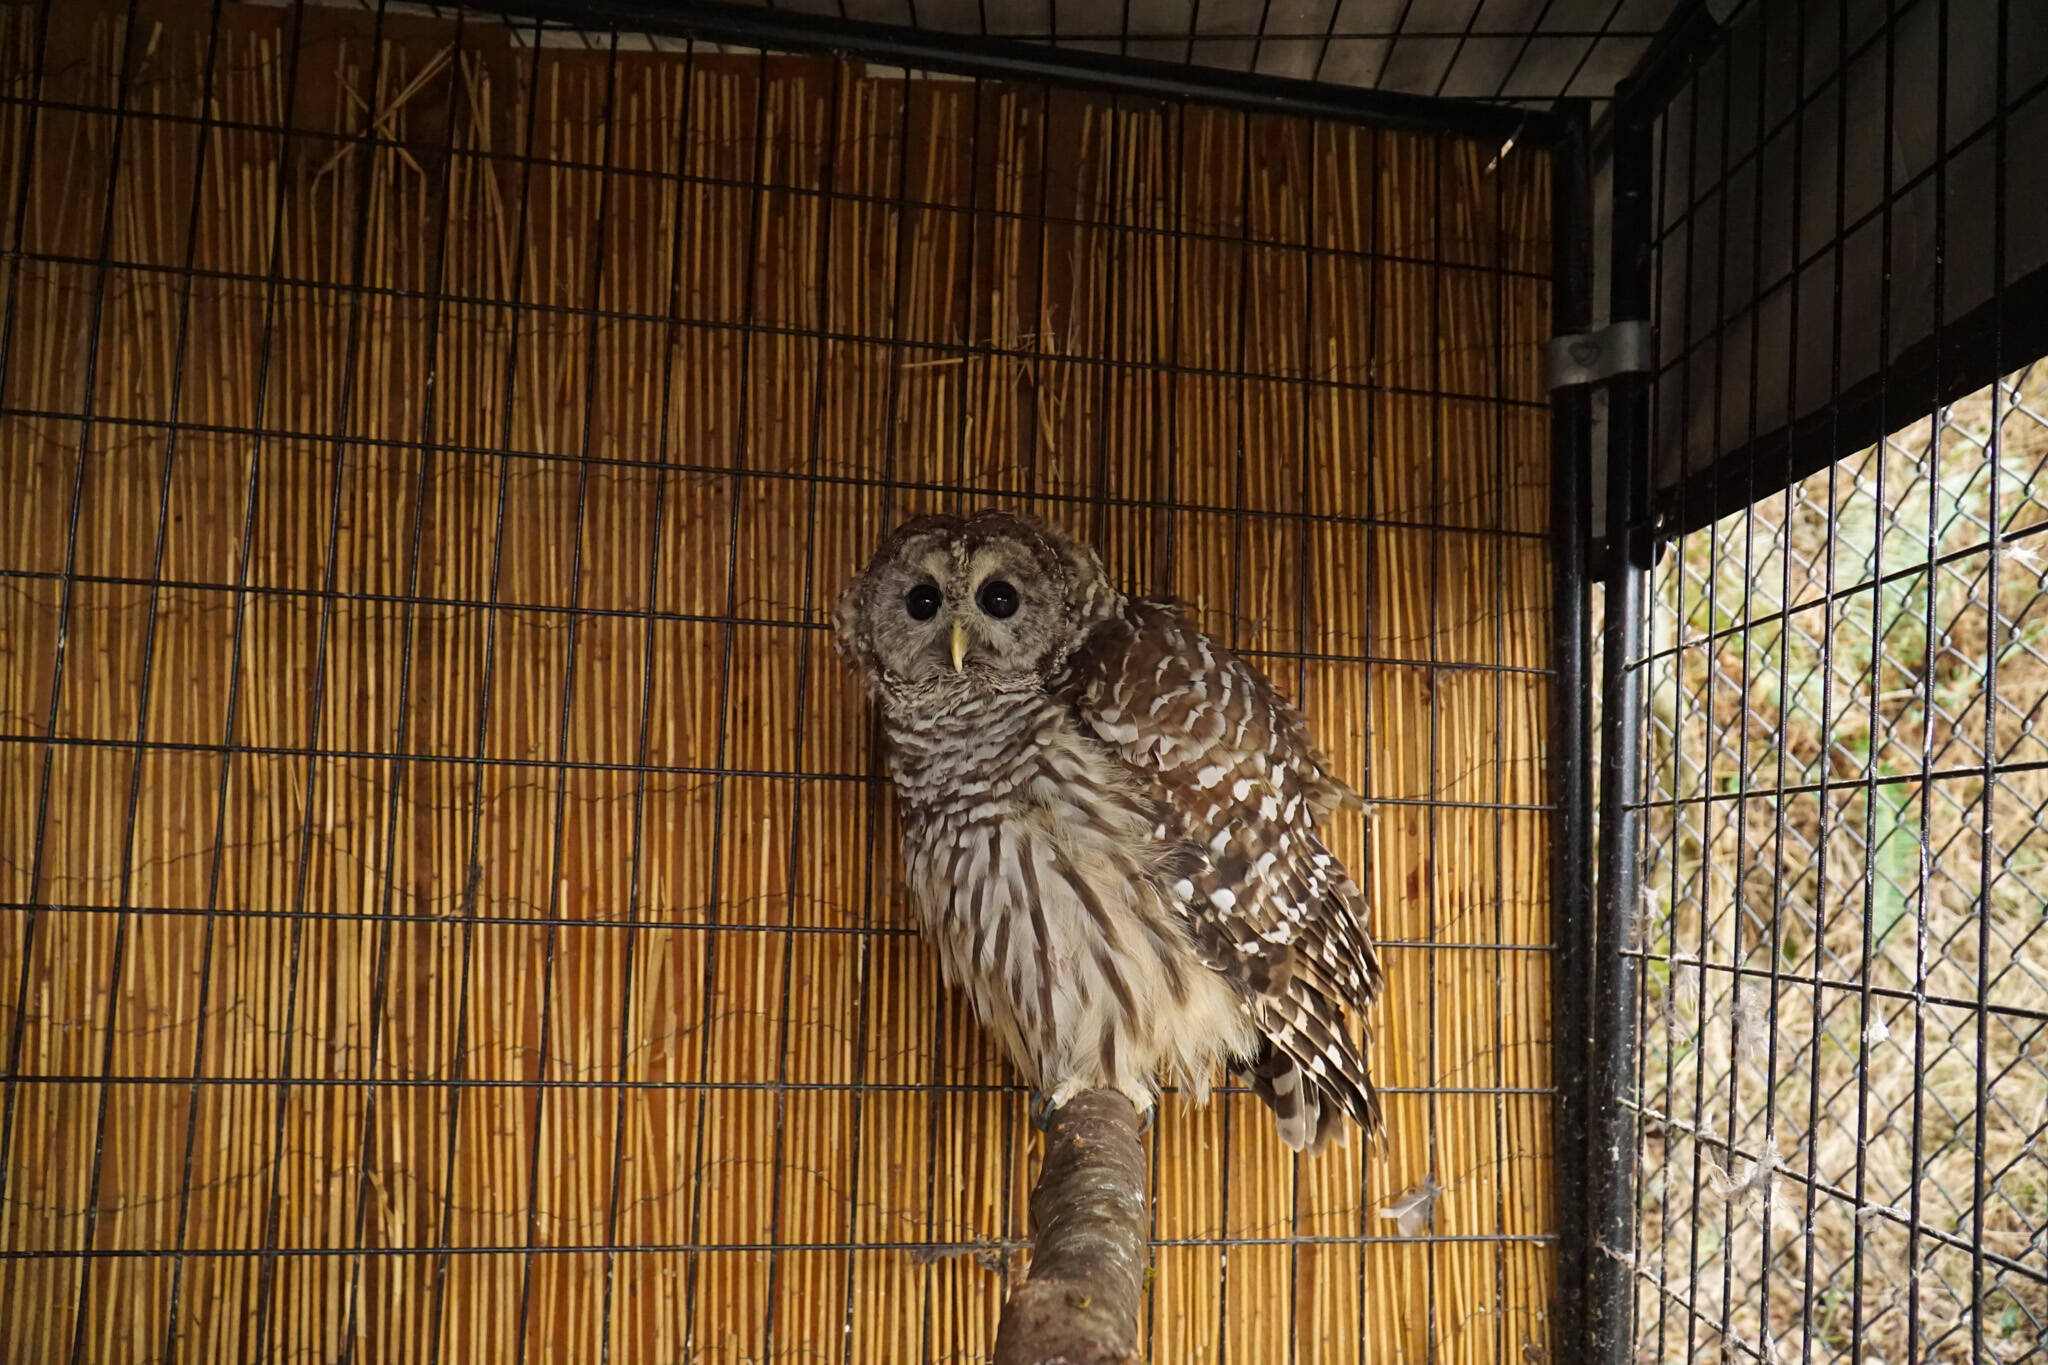 A bard owl at Northwest Wildlife Sanctuary. (Photo by Sam Fletcher)